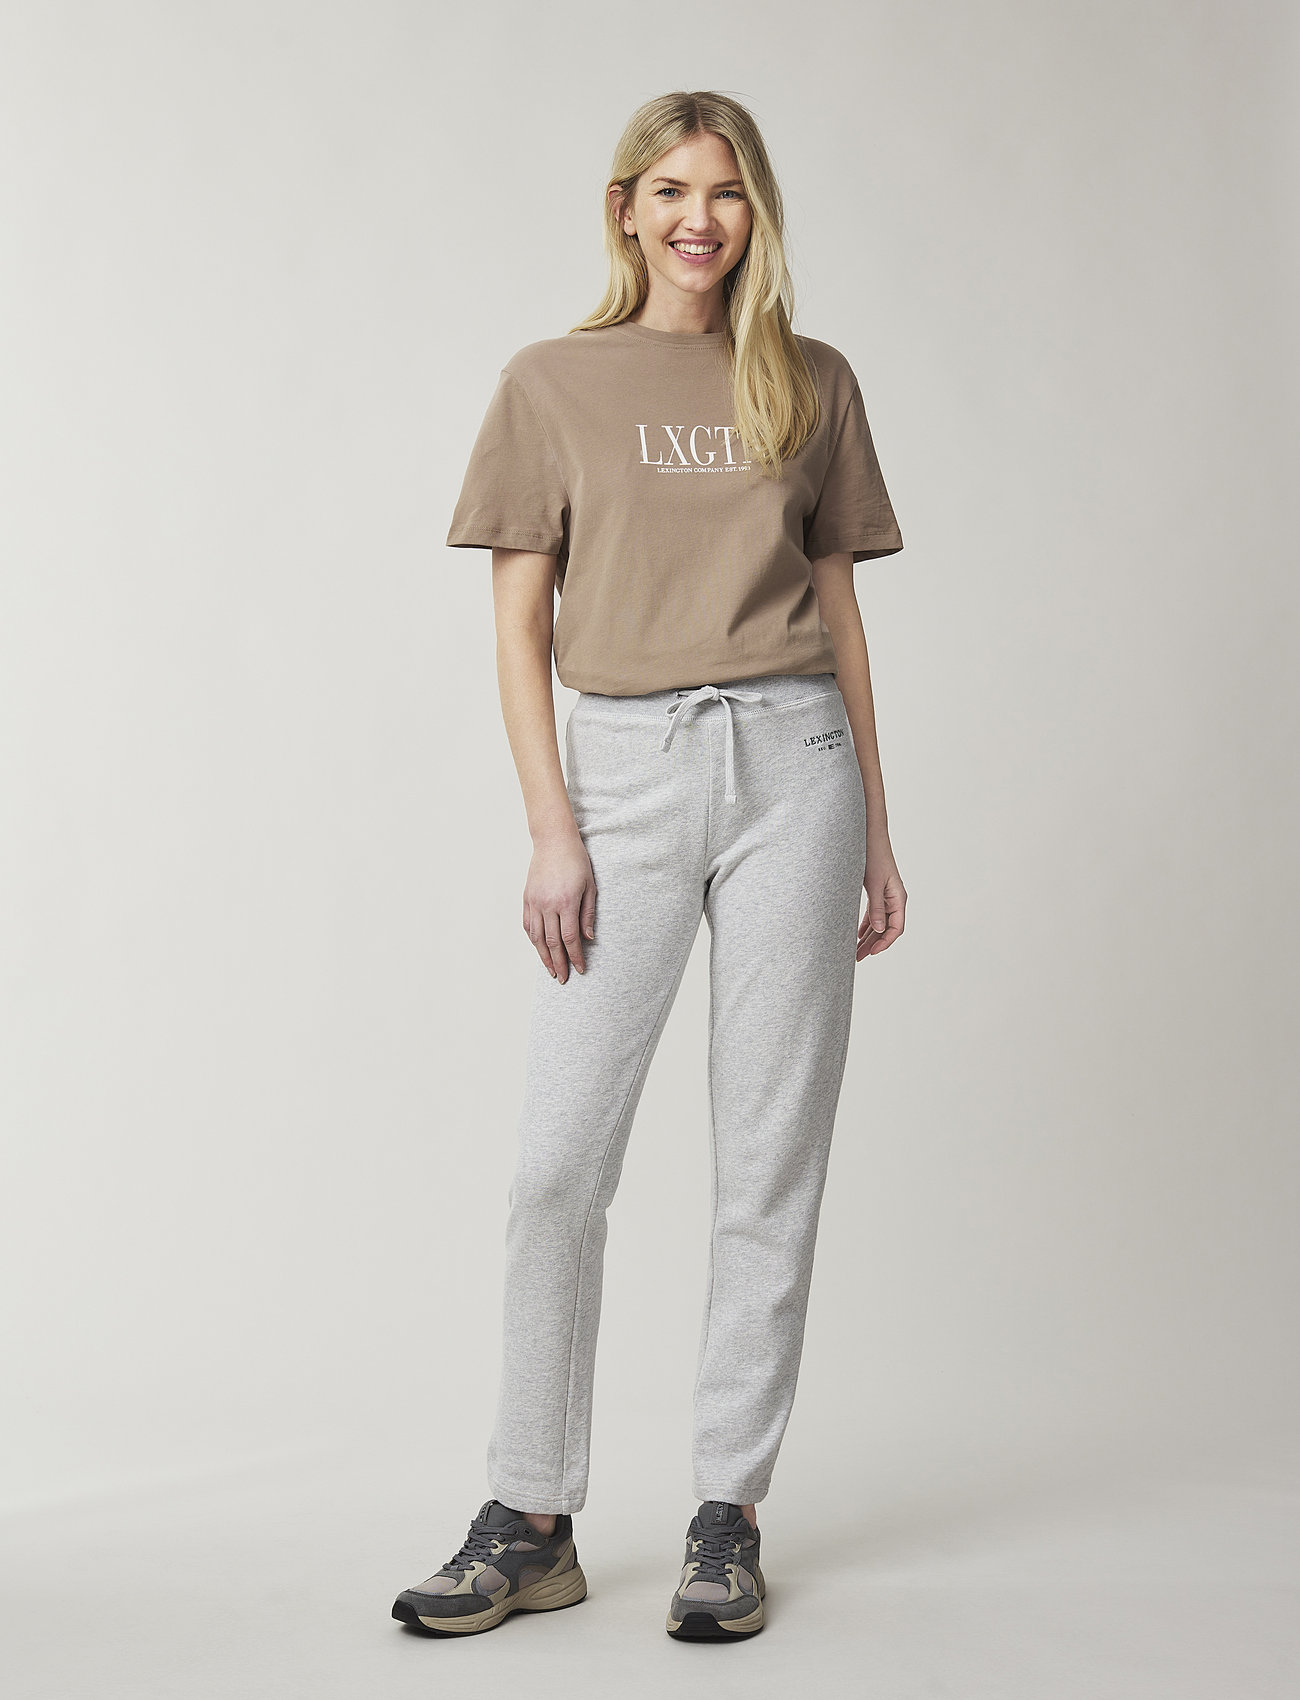 Lexington Clothing - Jenna Jersey Pants - light grey melange - 1